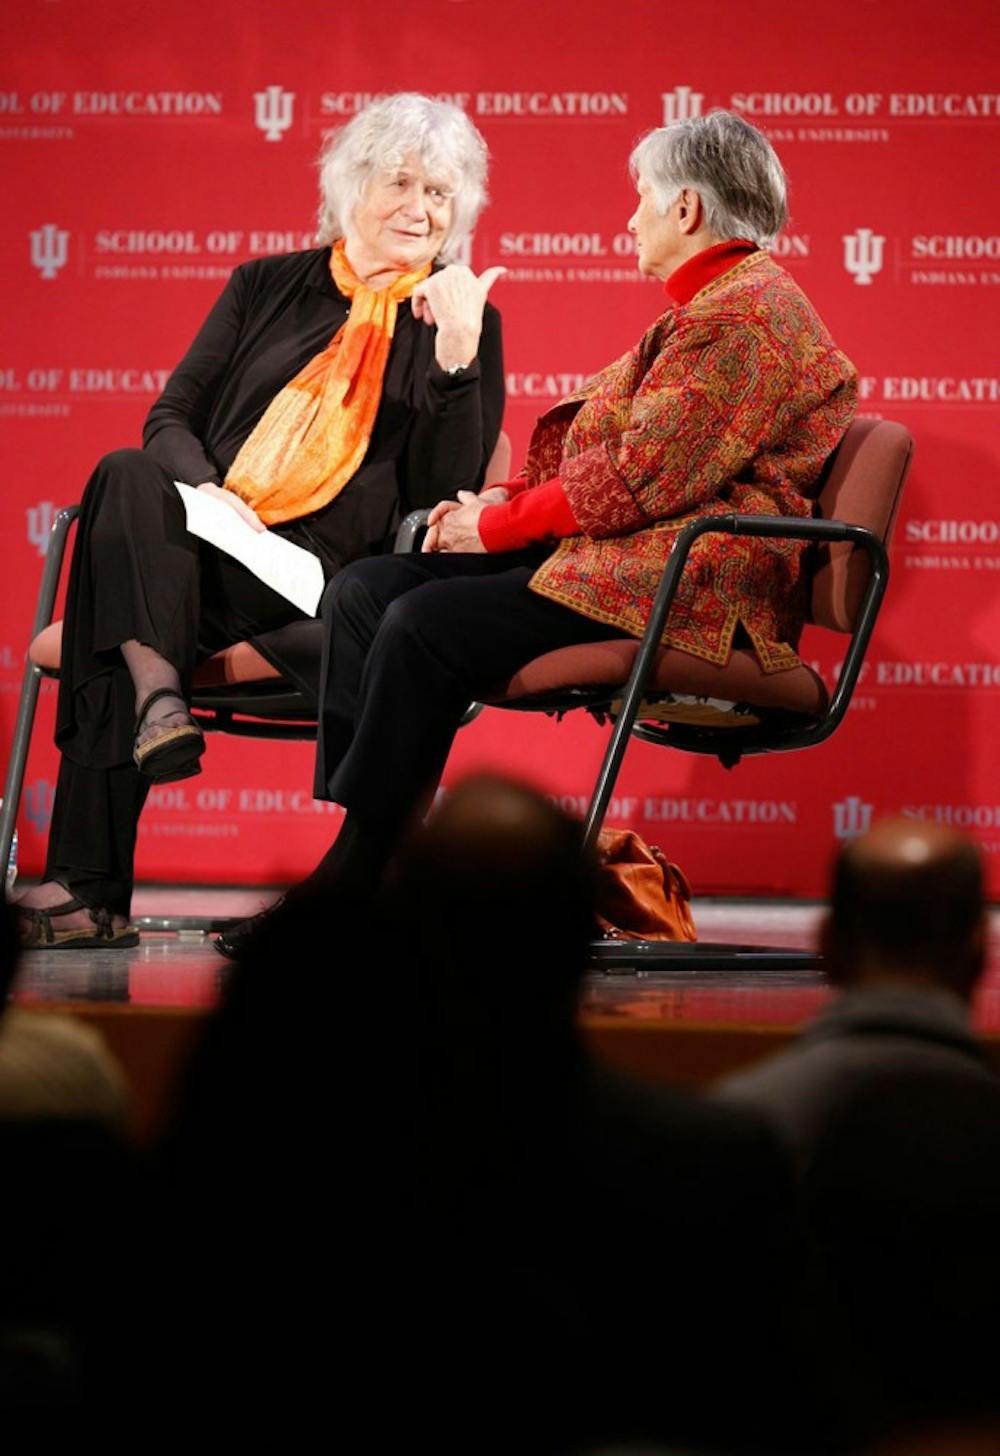 Deborah Meier, left, speaking to education activist Diane Ravitch during an event at Indiana University on April 27, 2011.